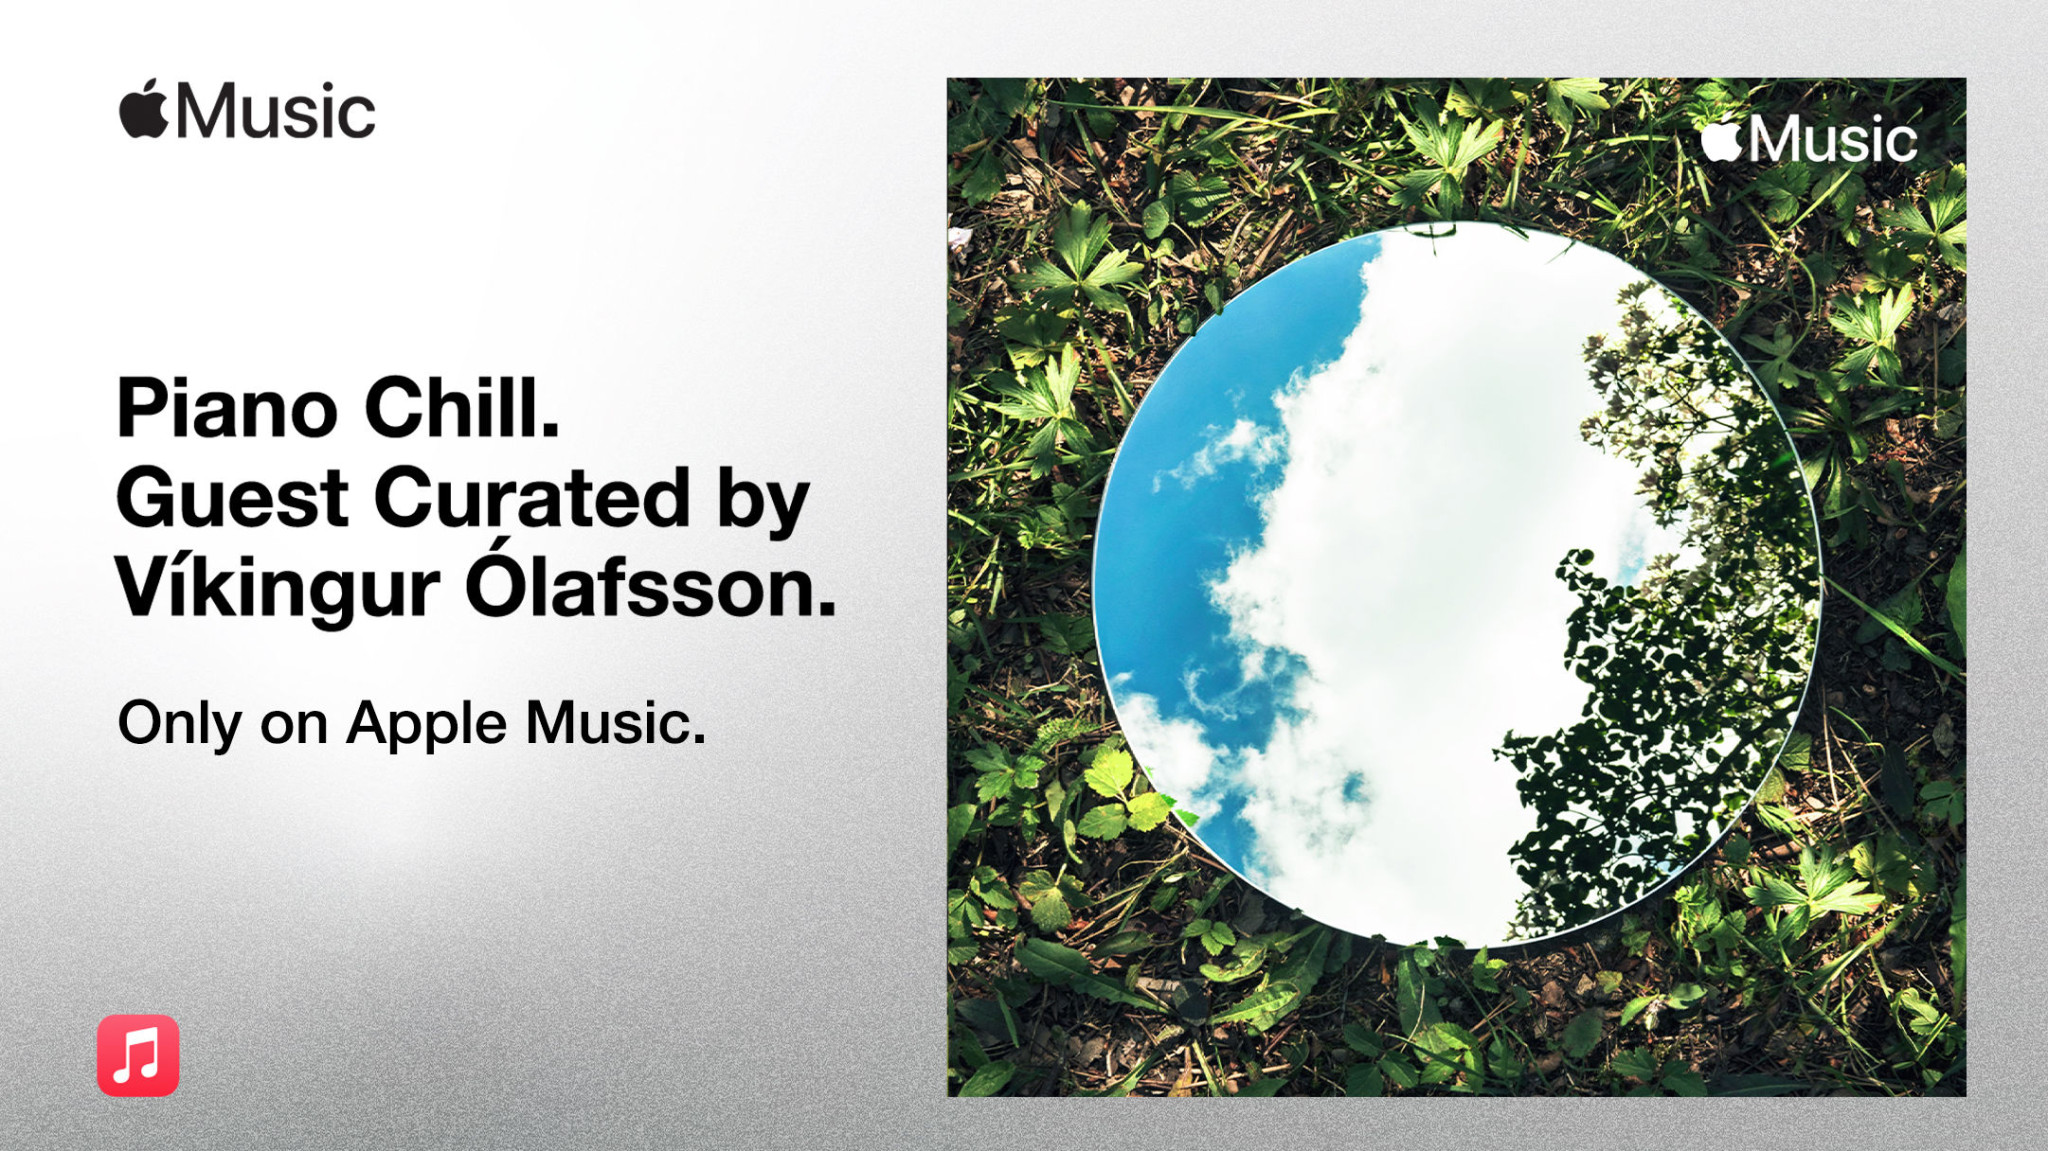 Víkingur Ólafsson guest curates 'Piano Chill' playlist on Apple Music